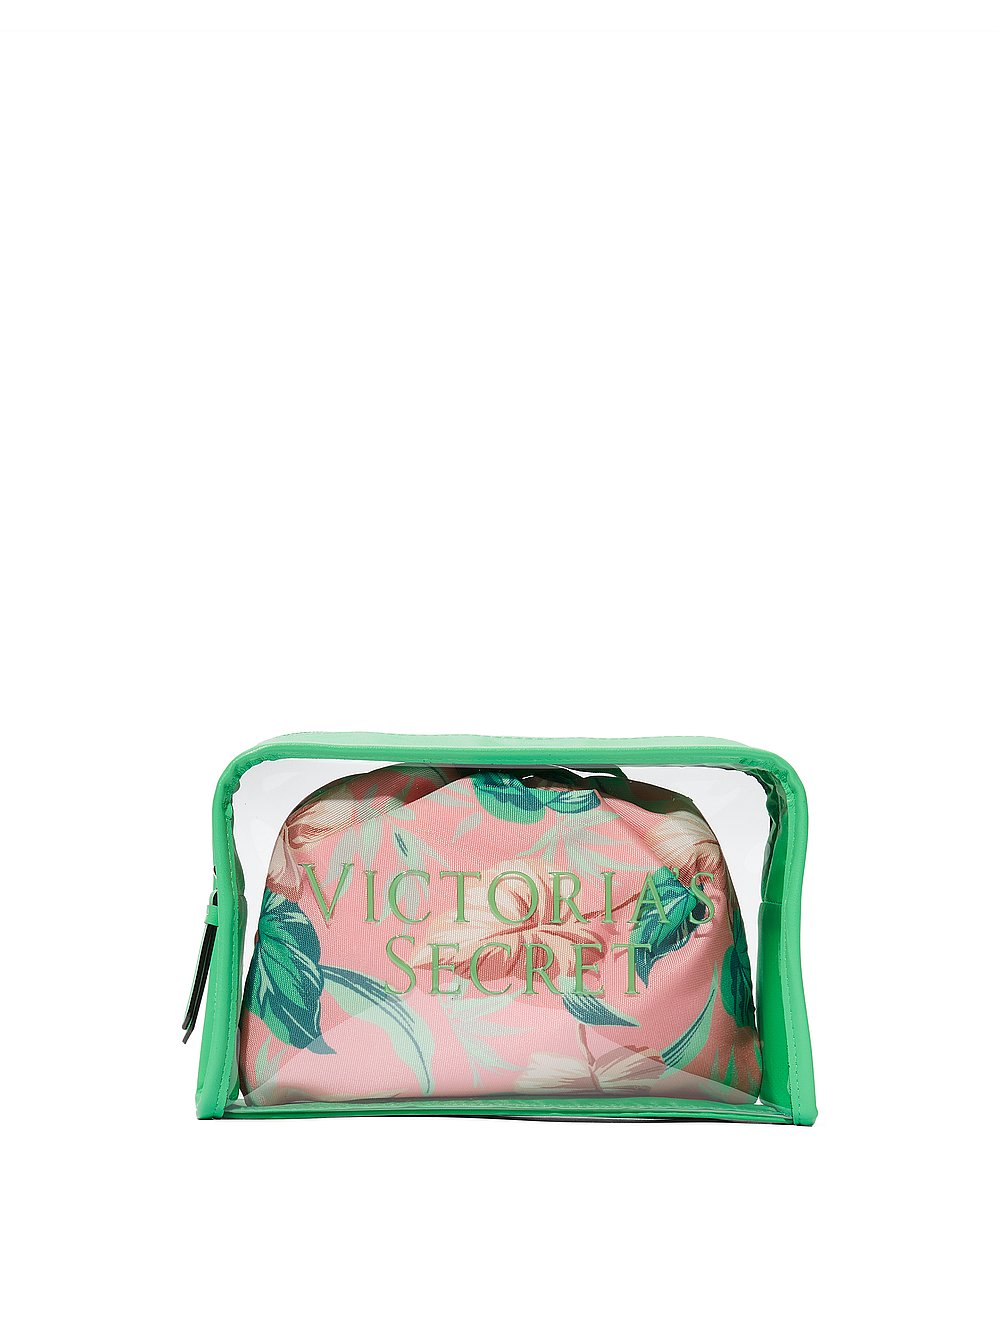 2-Piece Makeup Bag Victoria's Secret